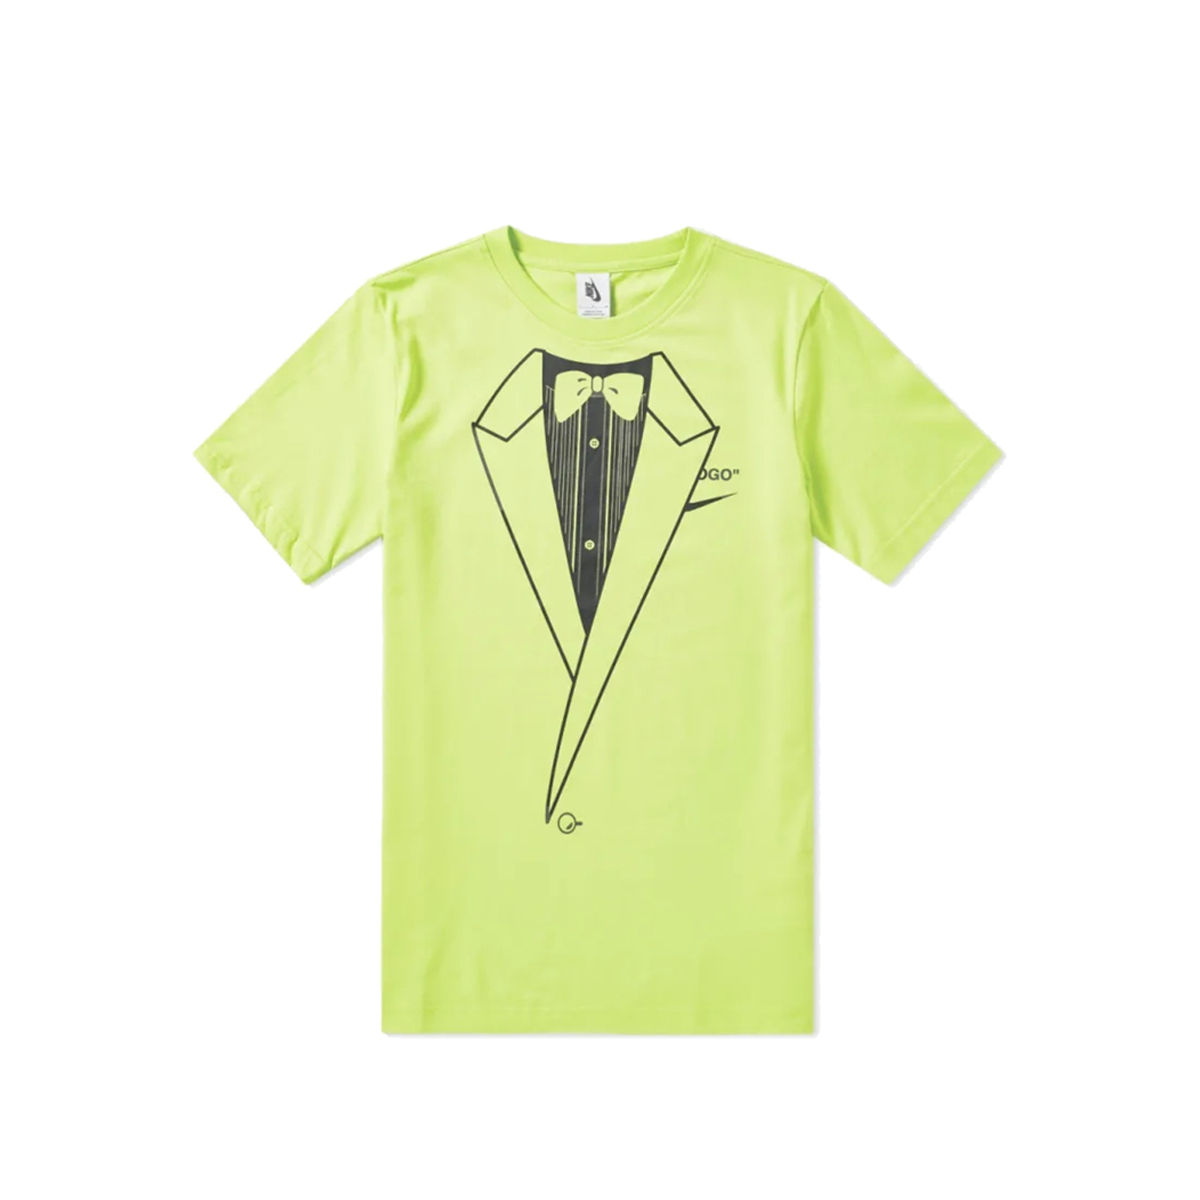 Nike x Off-White NRG A6 T-Shirt Tee Lime Green | TBD - KLEKT